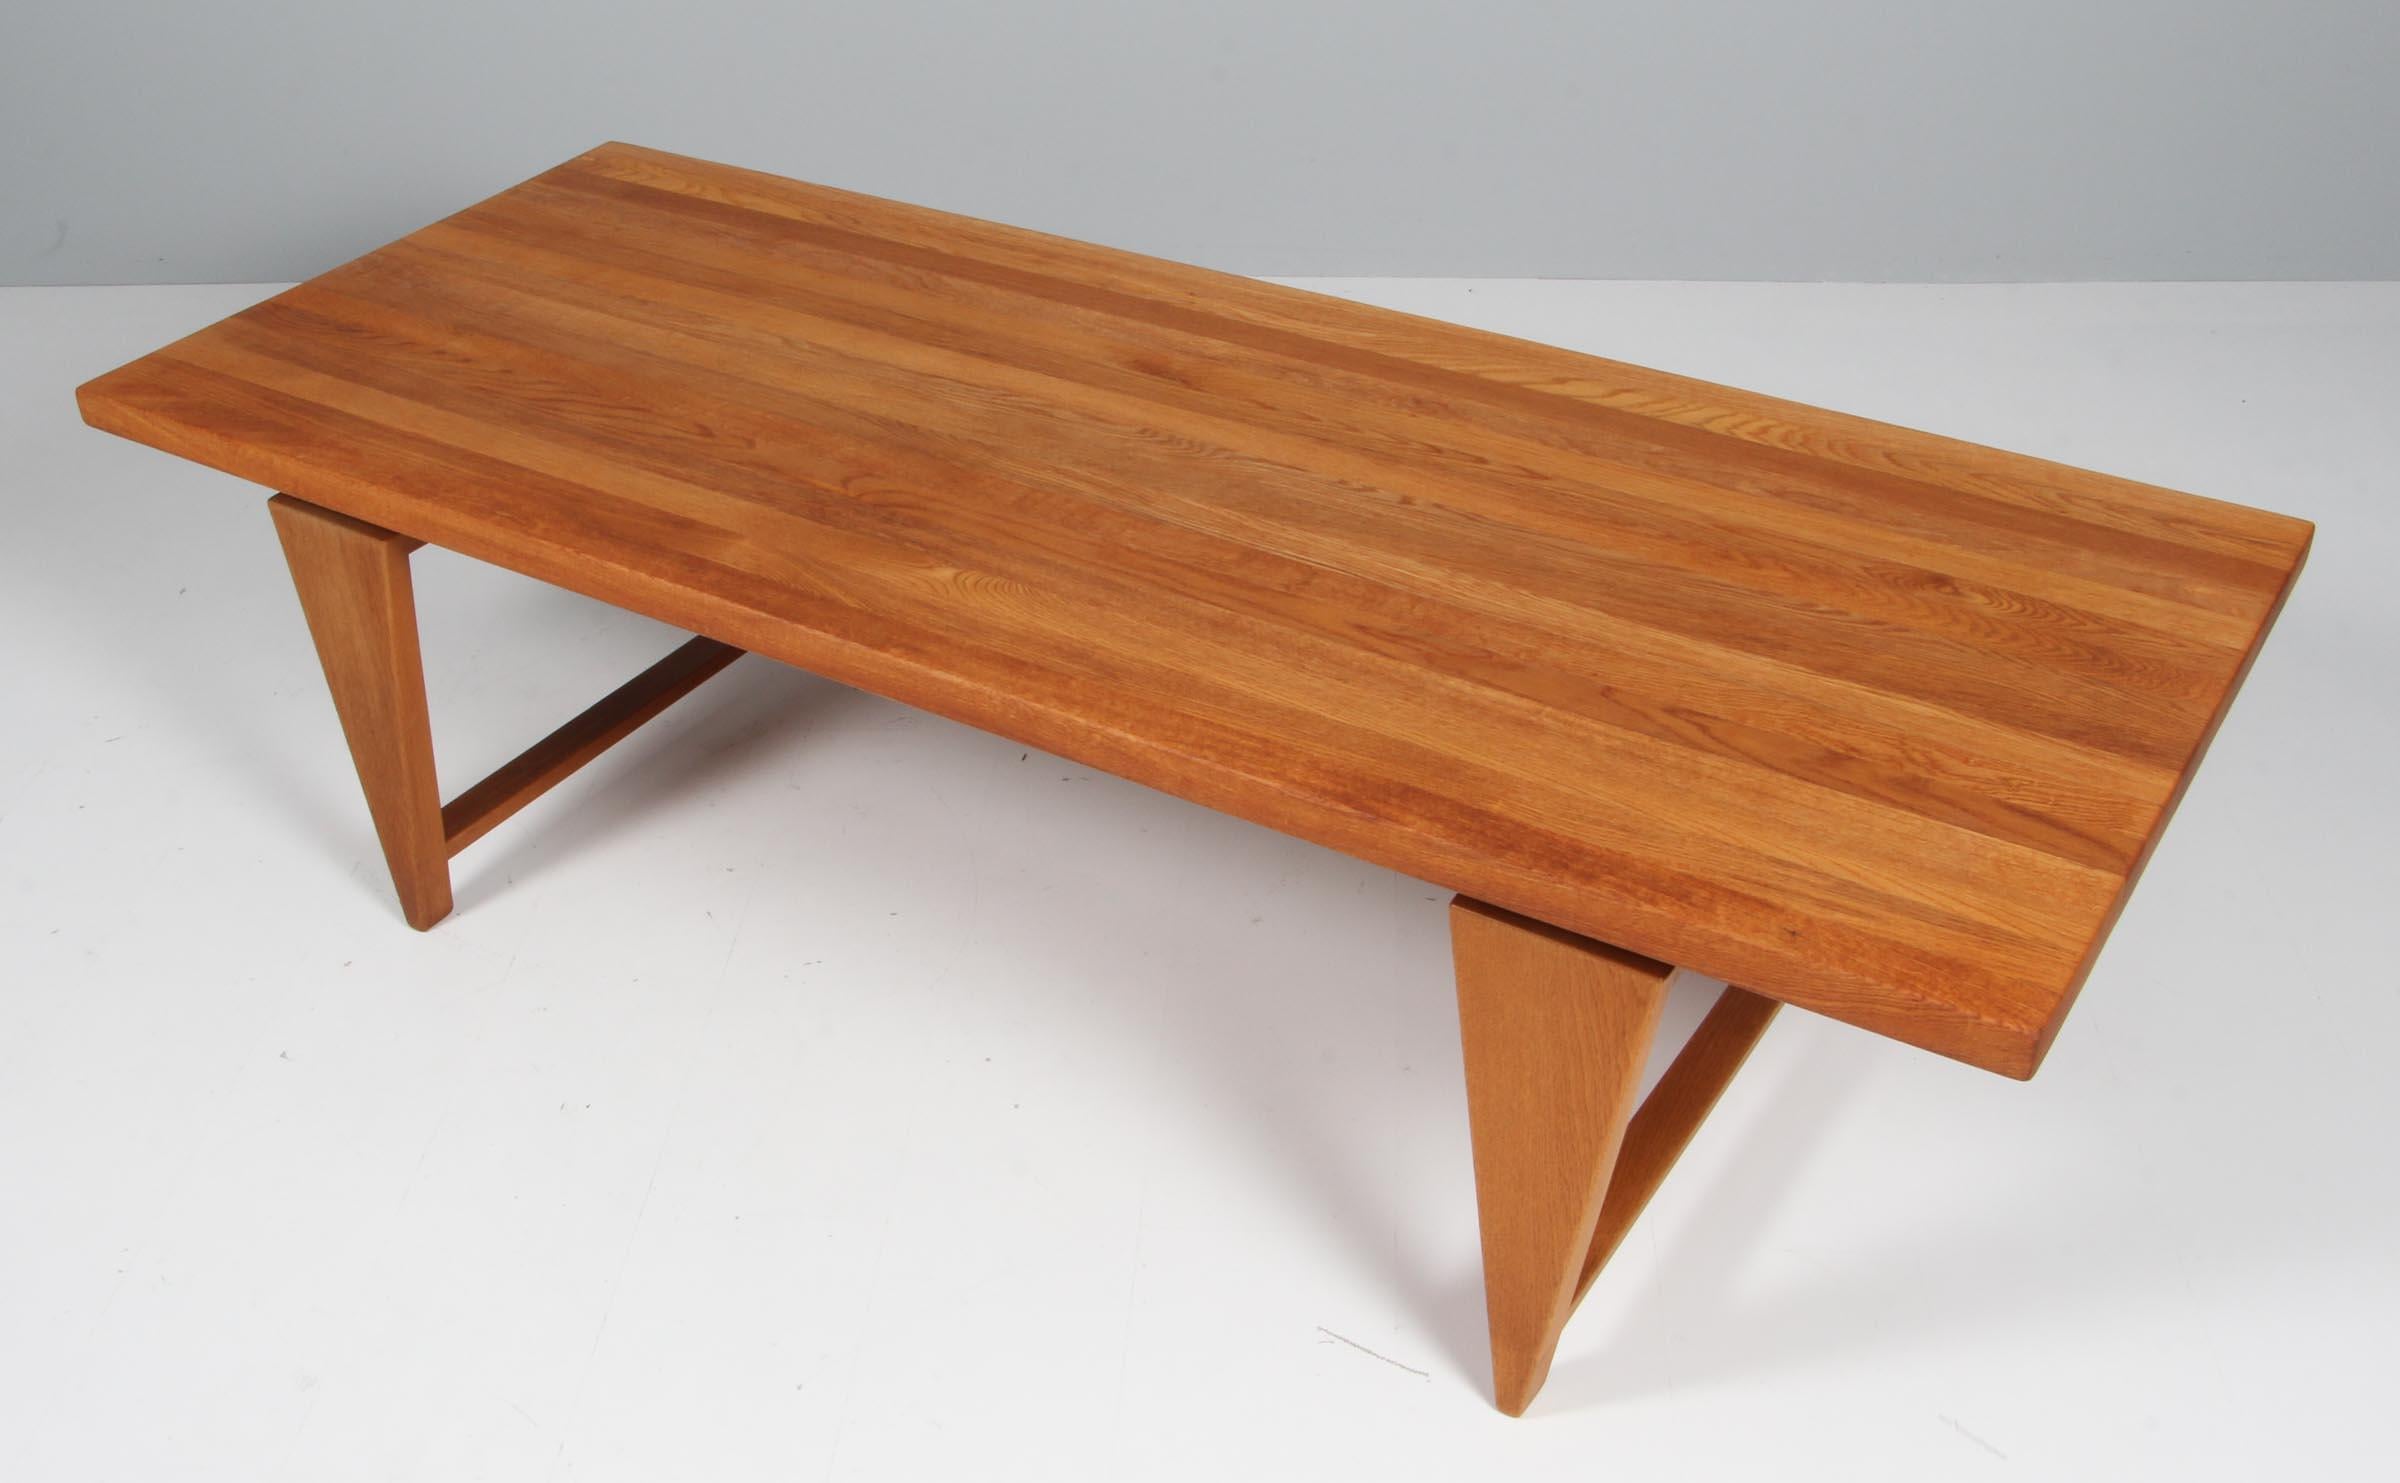 Illum Wikkelsø coffee table in solid oil treated oak.

Made by Mikael Laursen, Århus.